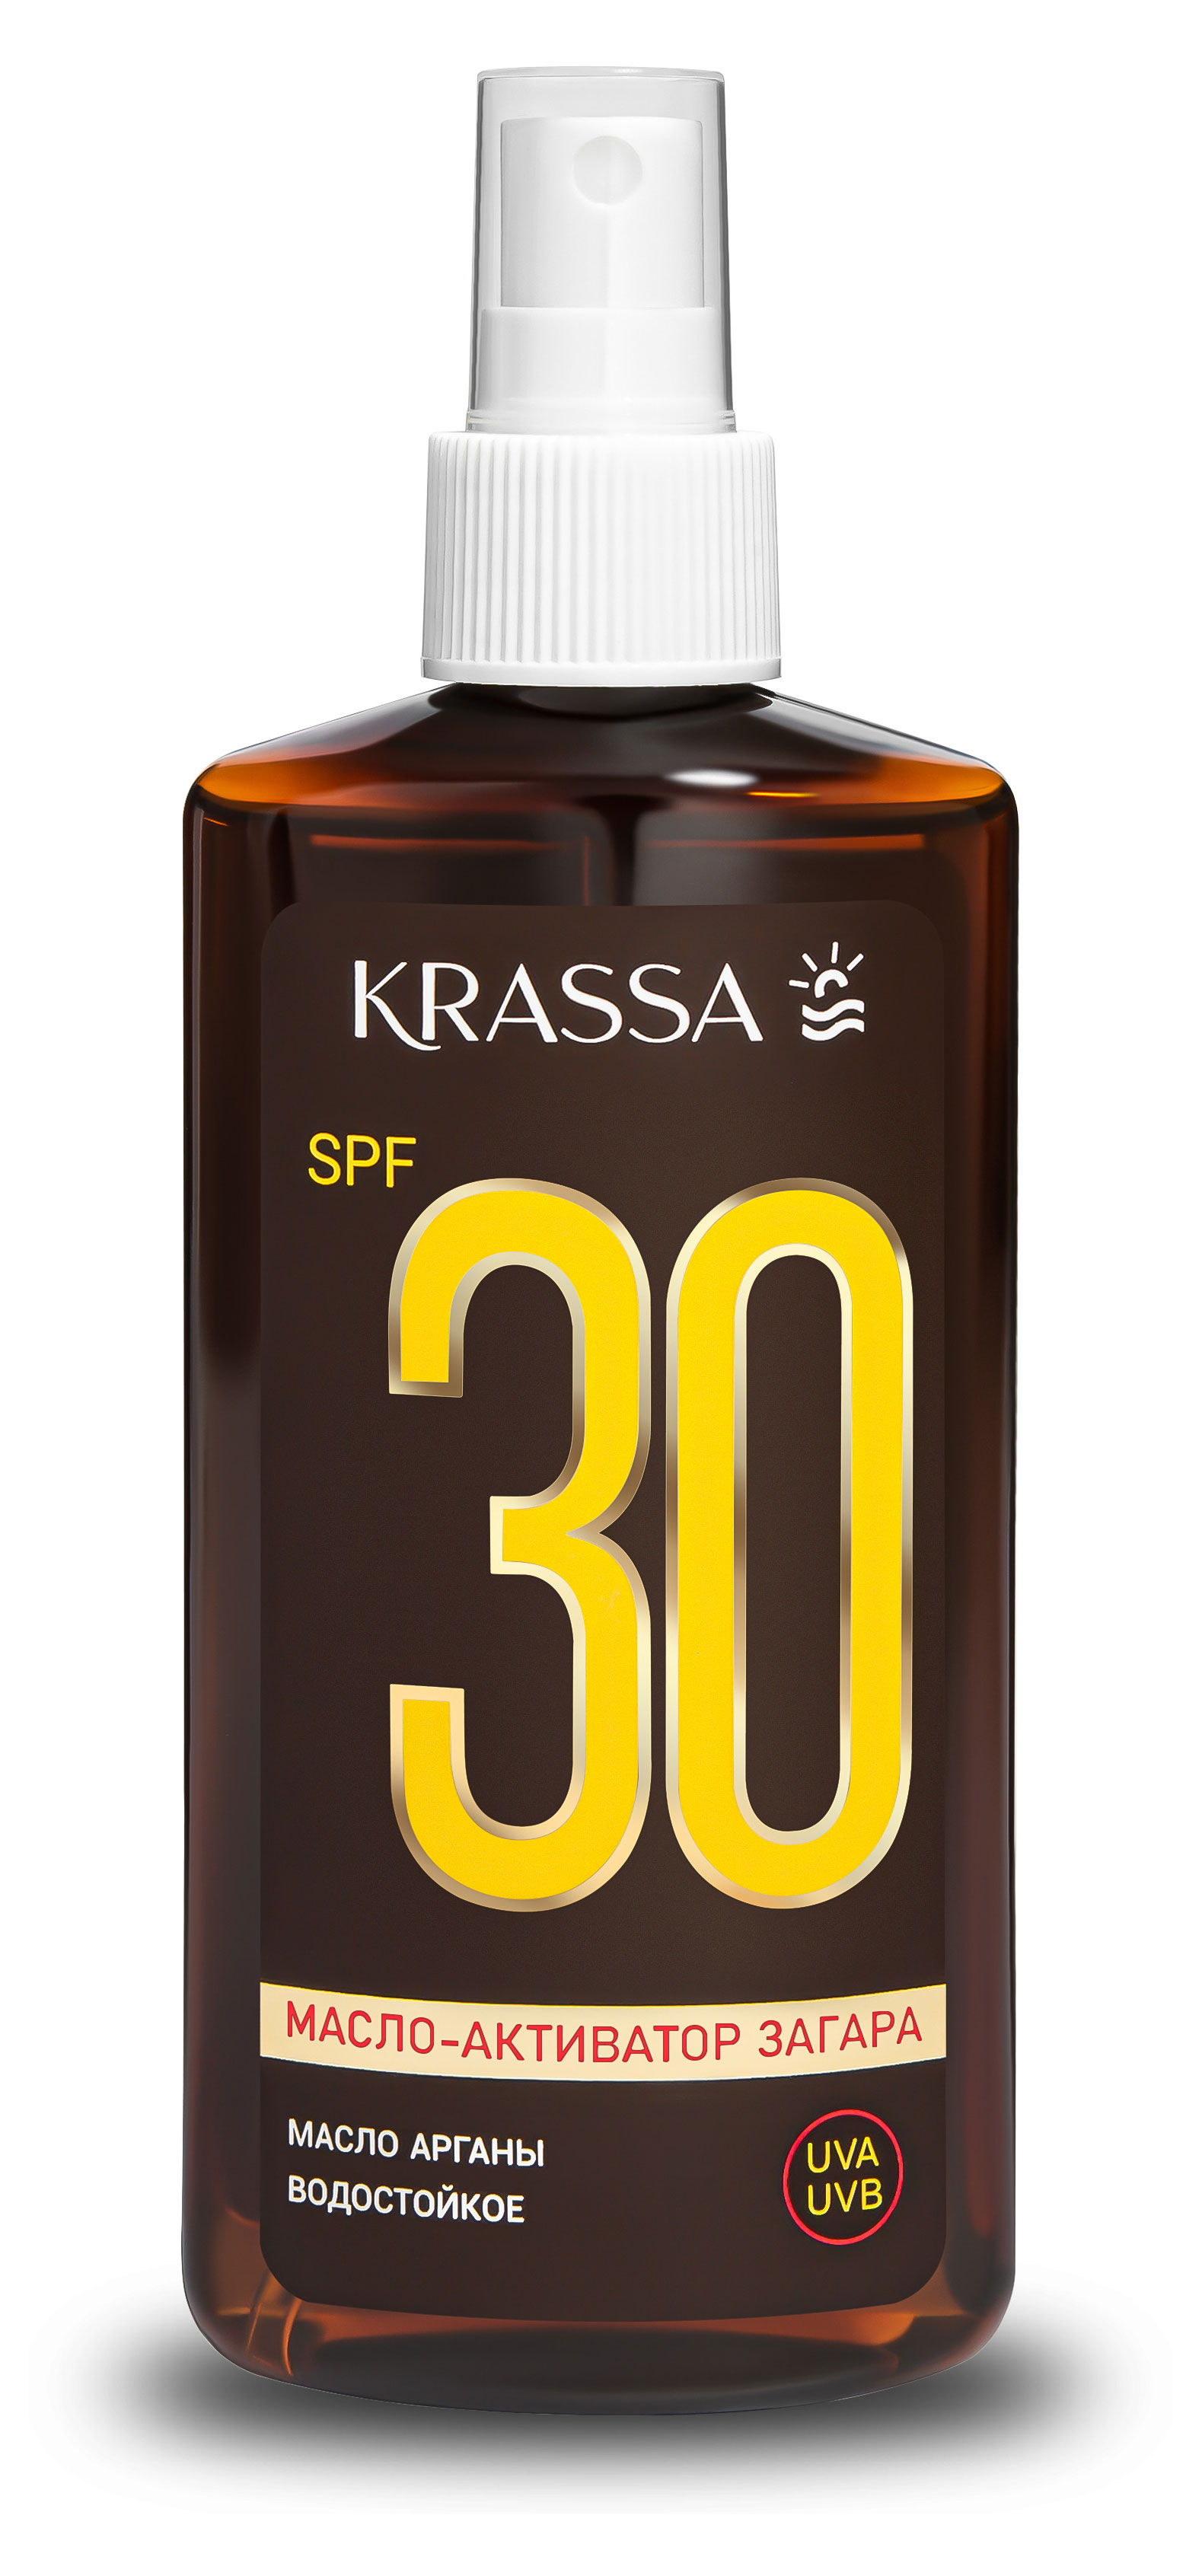 Масло-активатор загара Krassa SPF 30, 150 мл